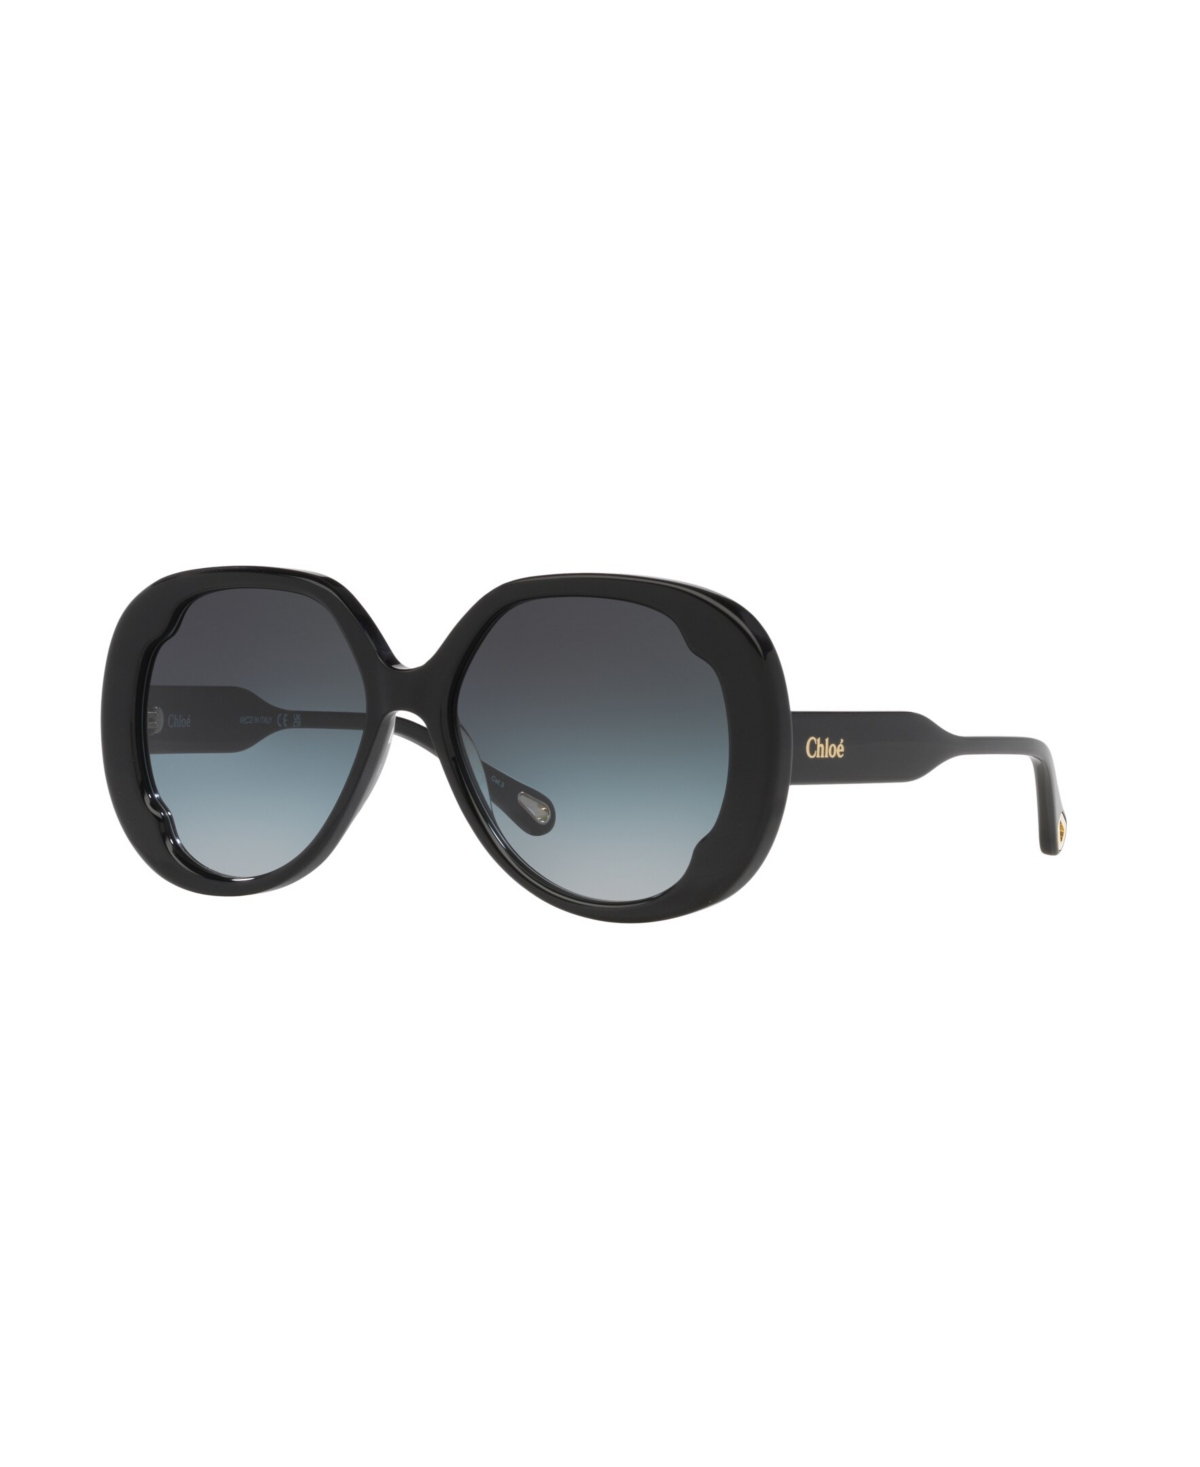 Chloé Women's Sunglasses, Ch0195s In Grey